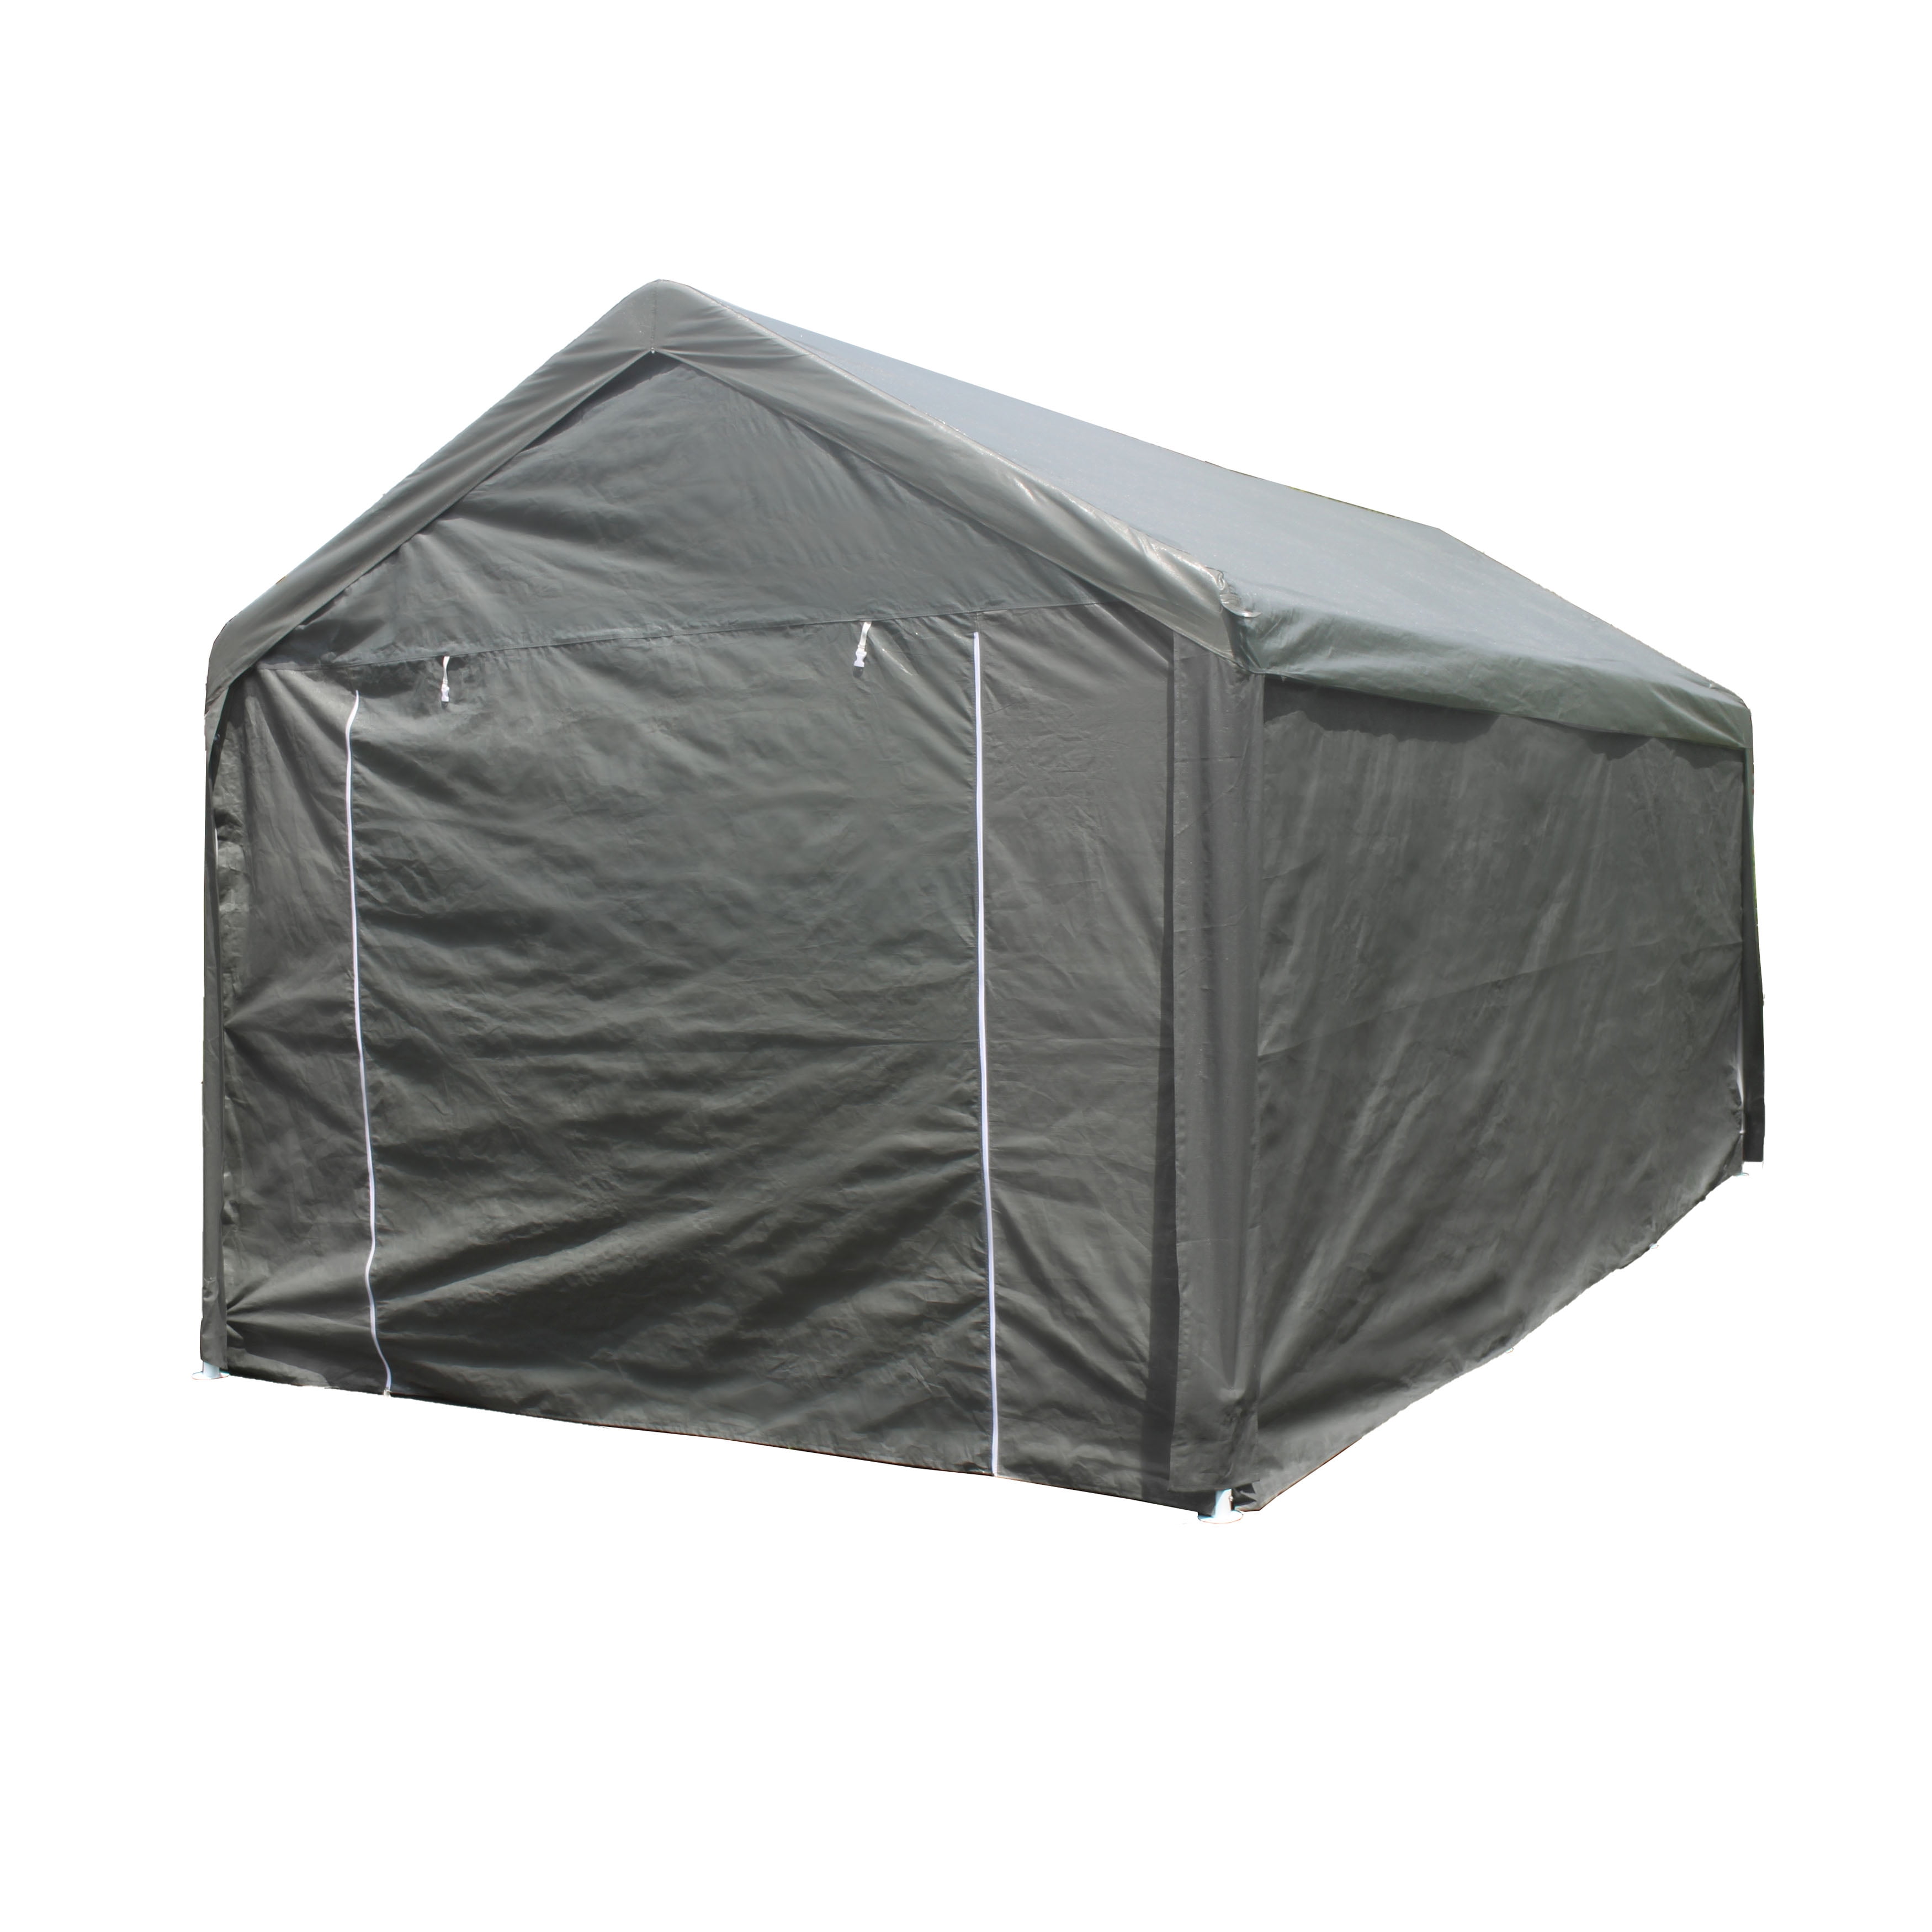 TePee Supplies 10 x 20 ft. Heavy Duty Outdoor Gazebo Carport Canopy Tent with Sidewalls&#44; Grey